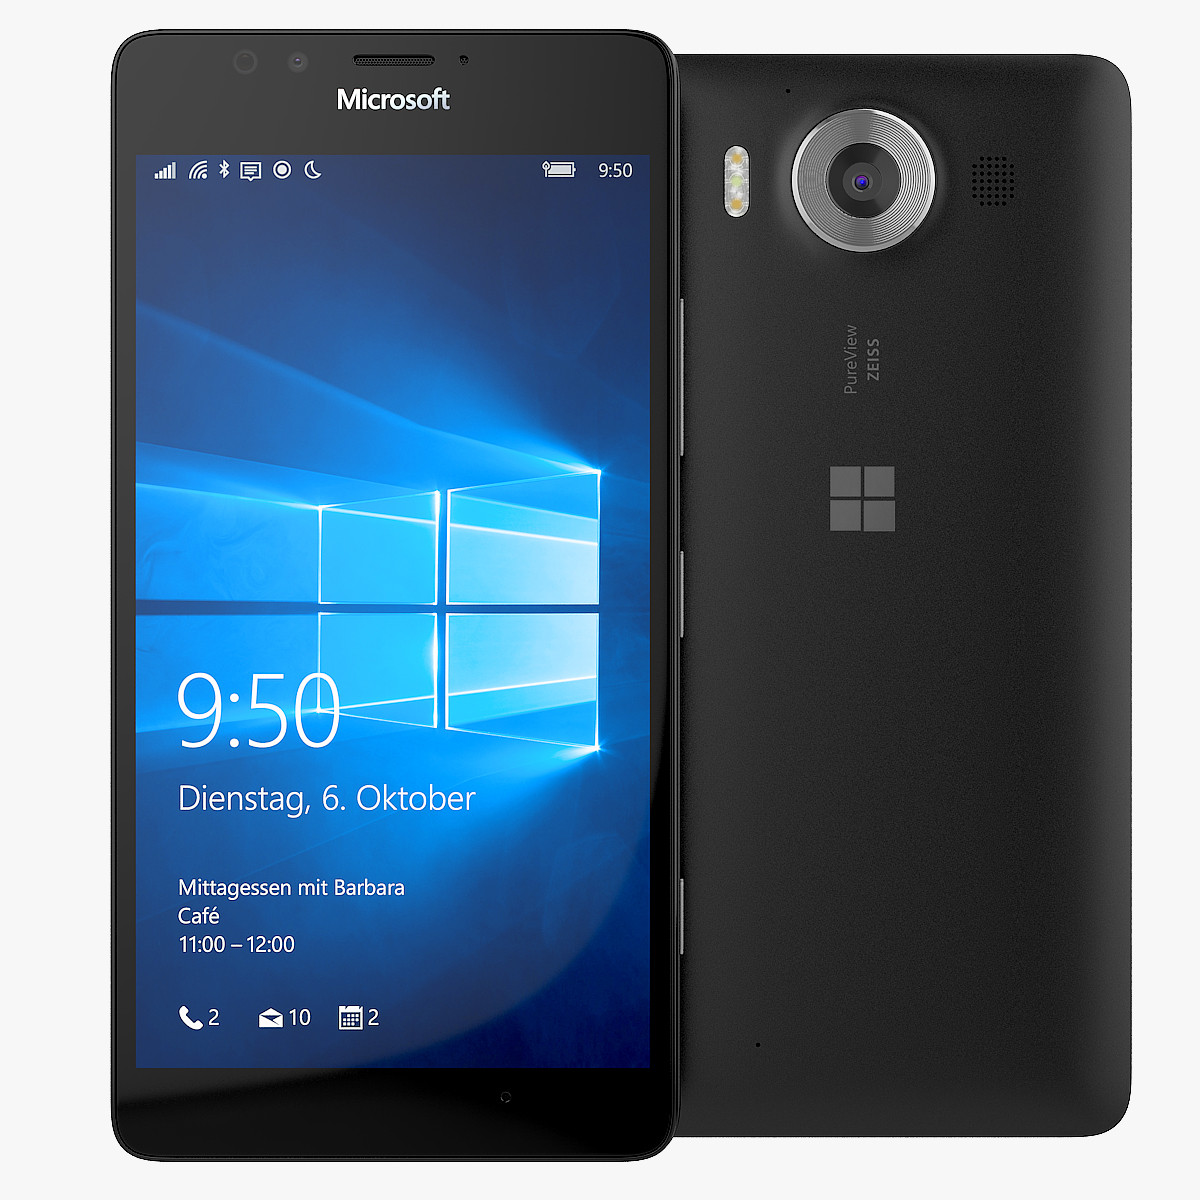 Microsoft Lumia Smartphone Black And White